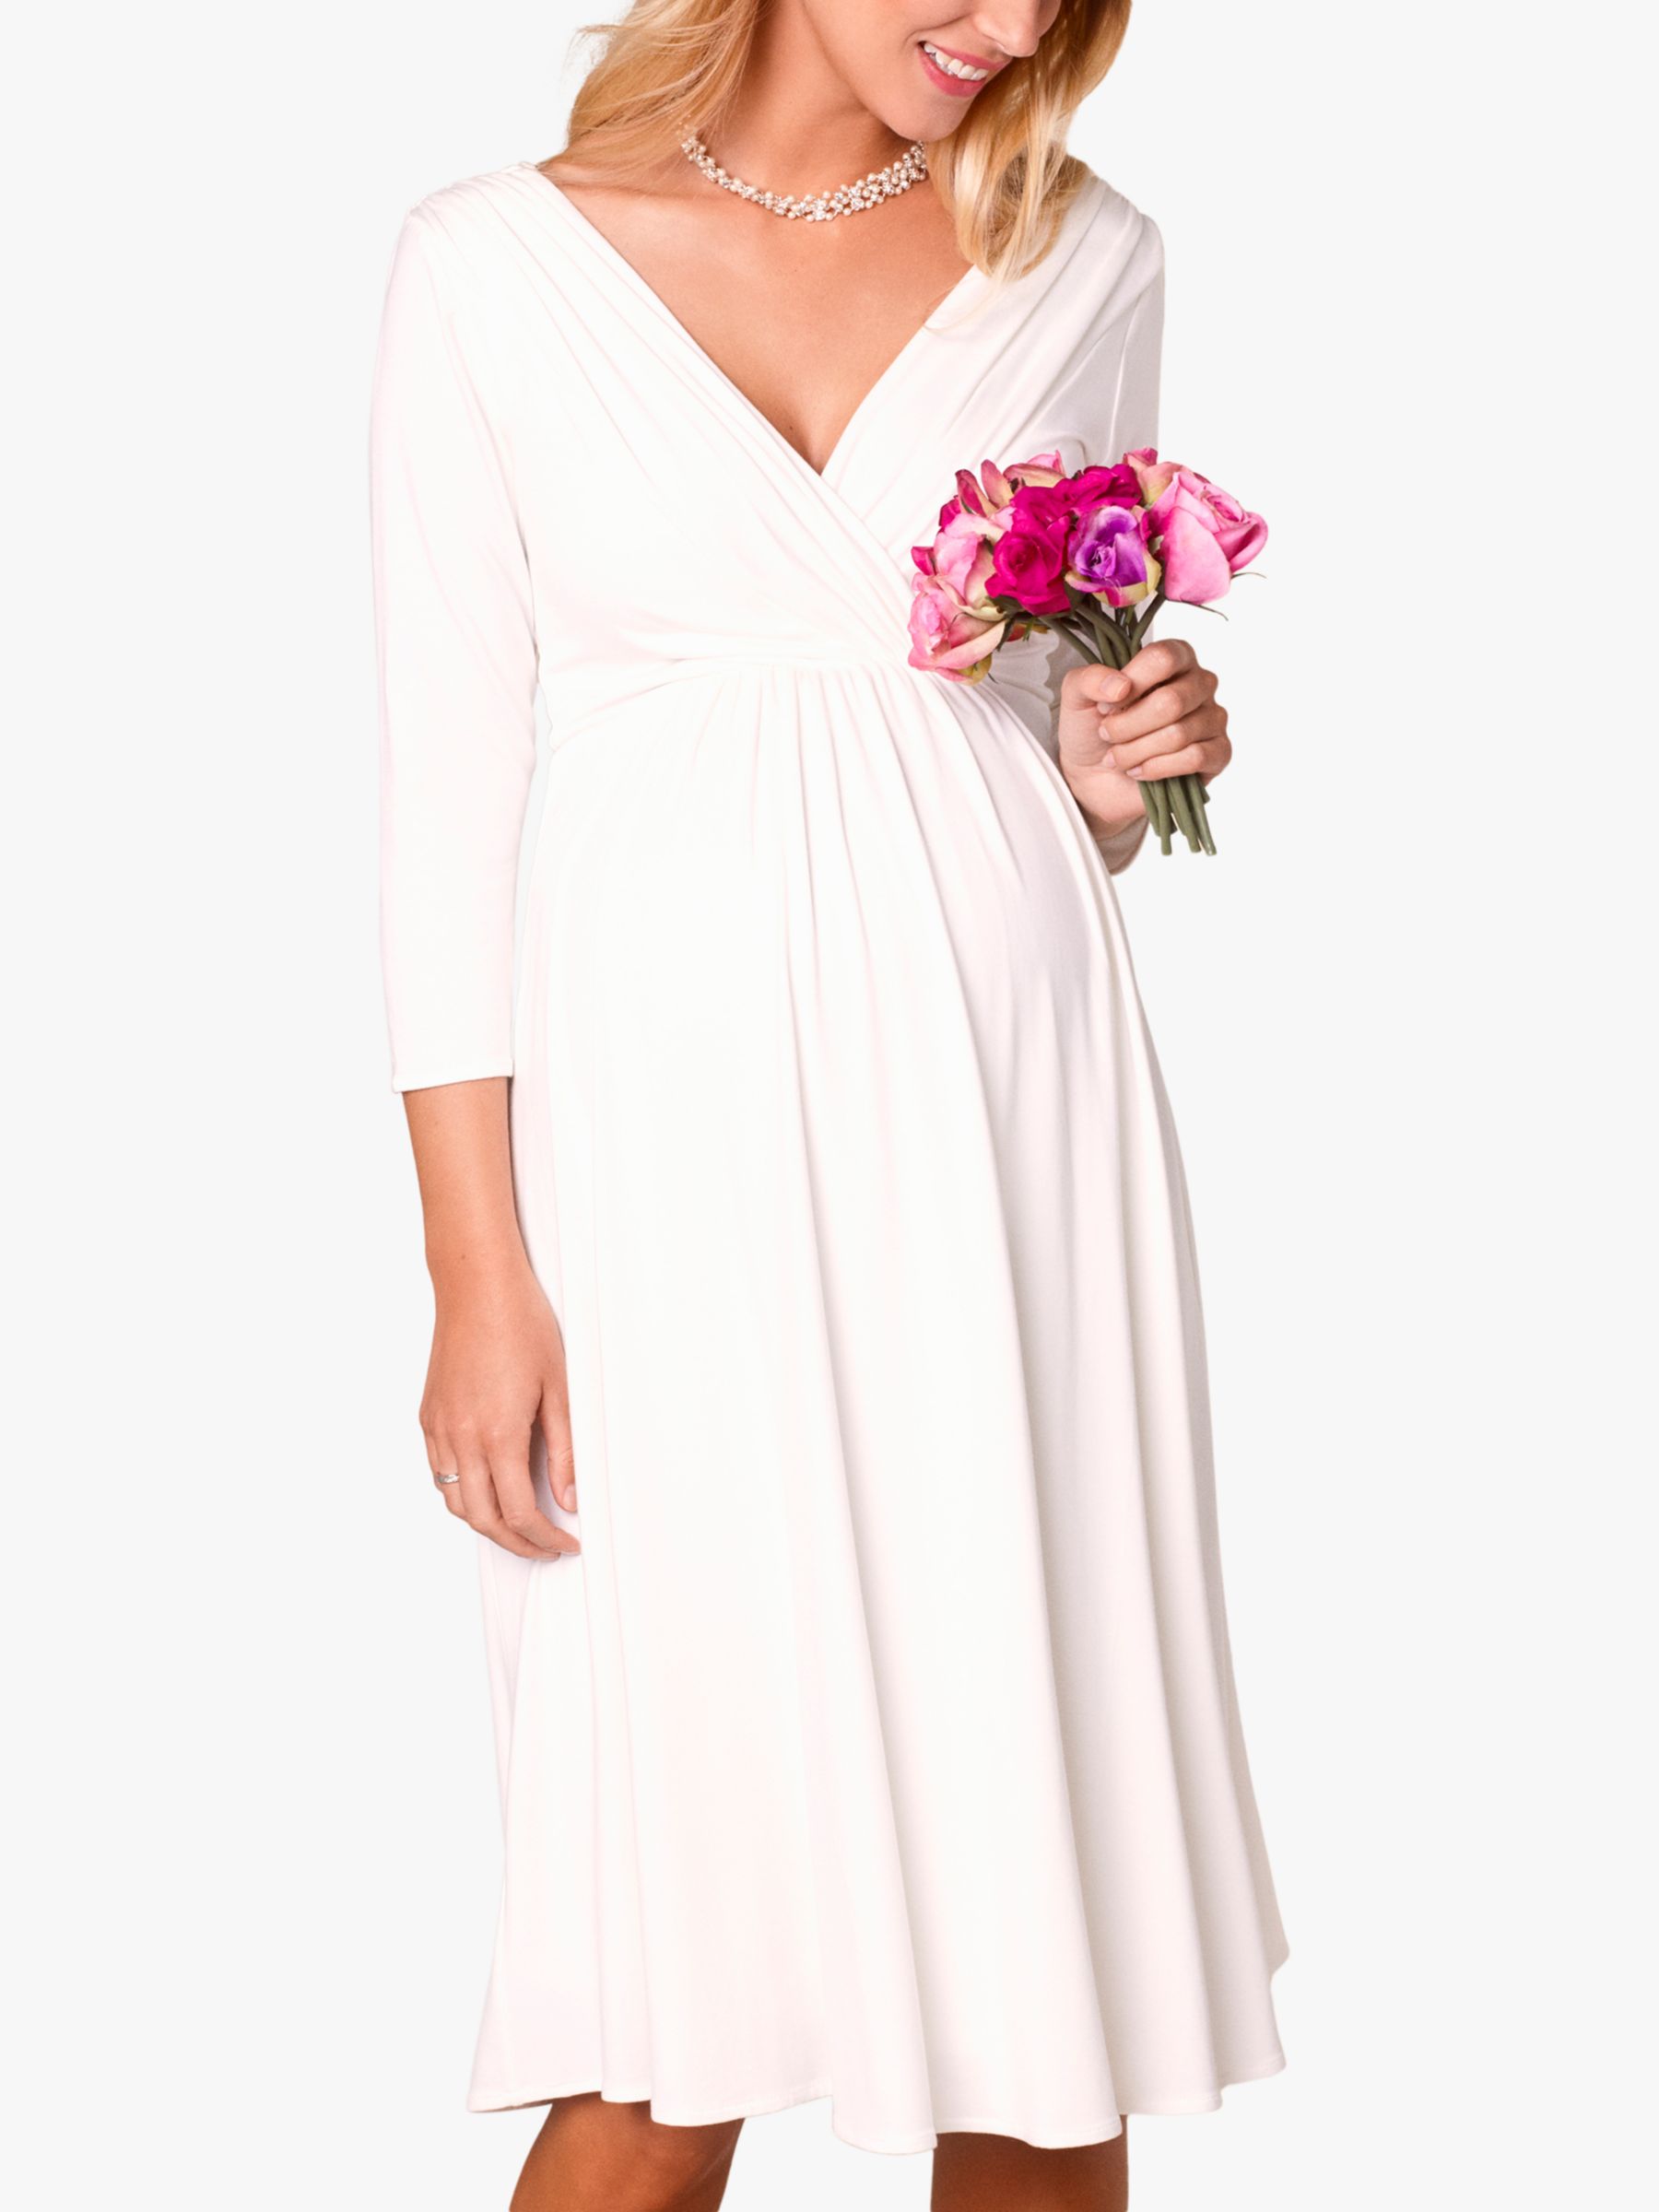 Tiffany Rose Willow Maternity Short Wedding Dress, Ivory, 6-8